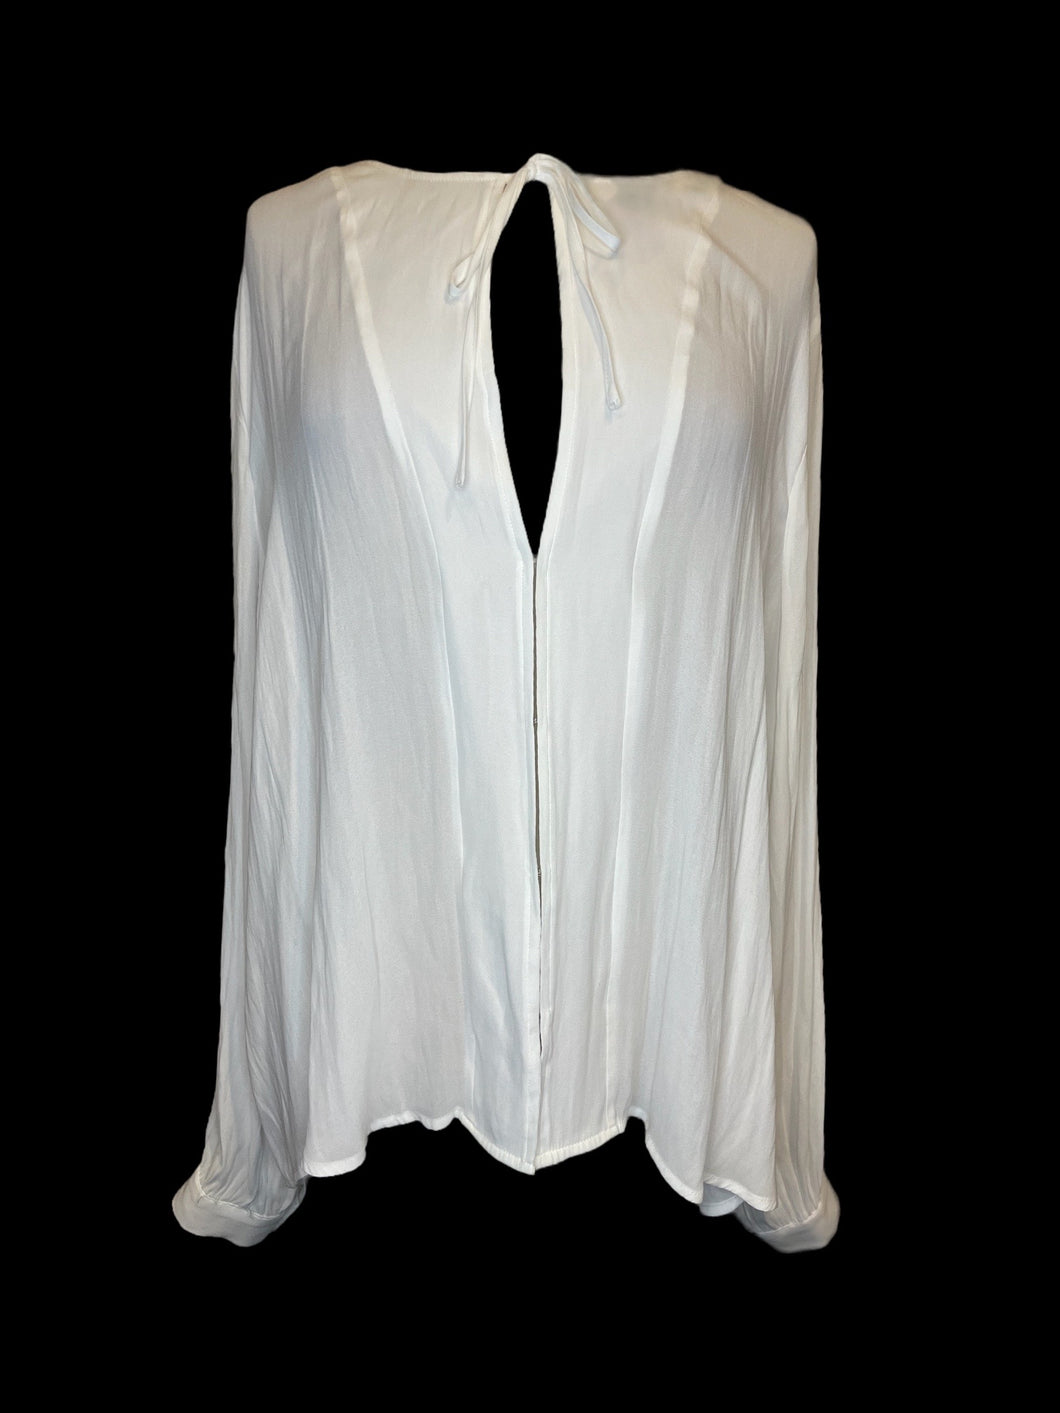 4X Sheer white balloon sleeve tie keyhole neckline top w/ hook & eye clasp closure, & button cuffs